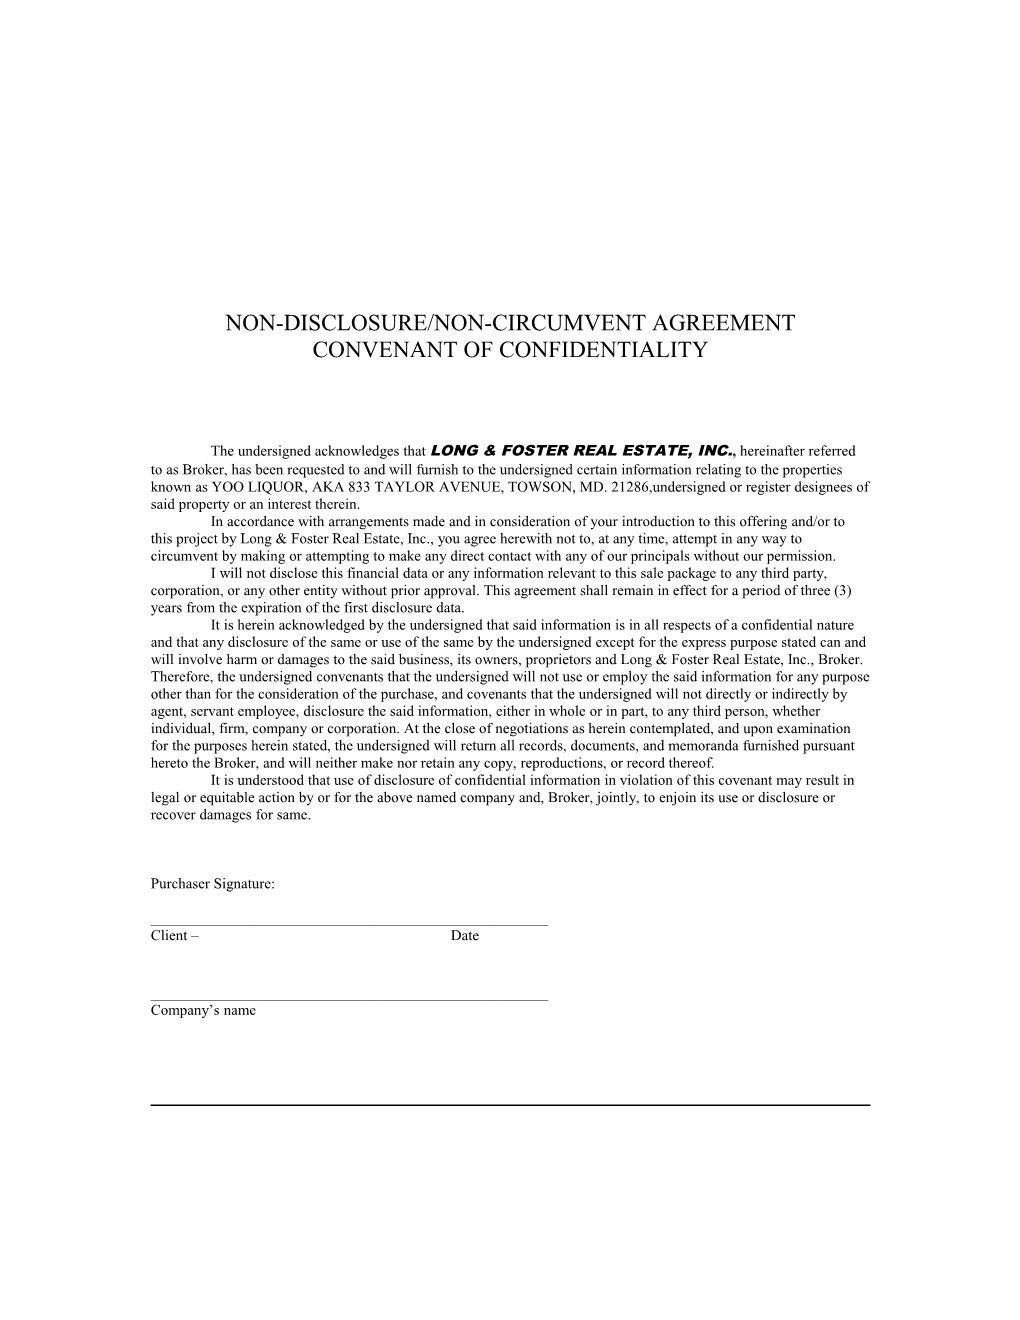 Non-Disclosure/Non-Circumvent Agreement